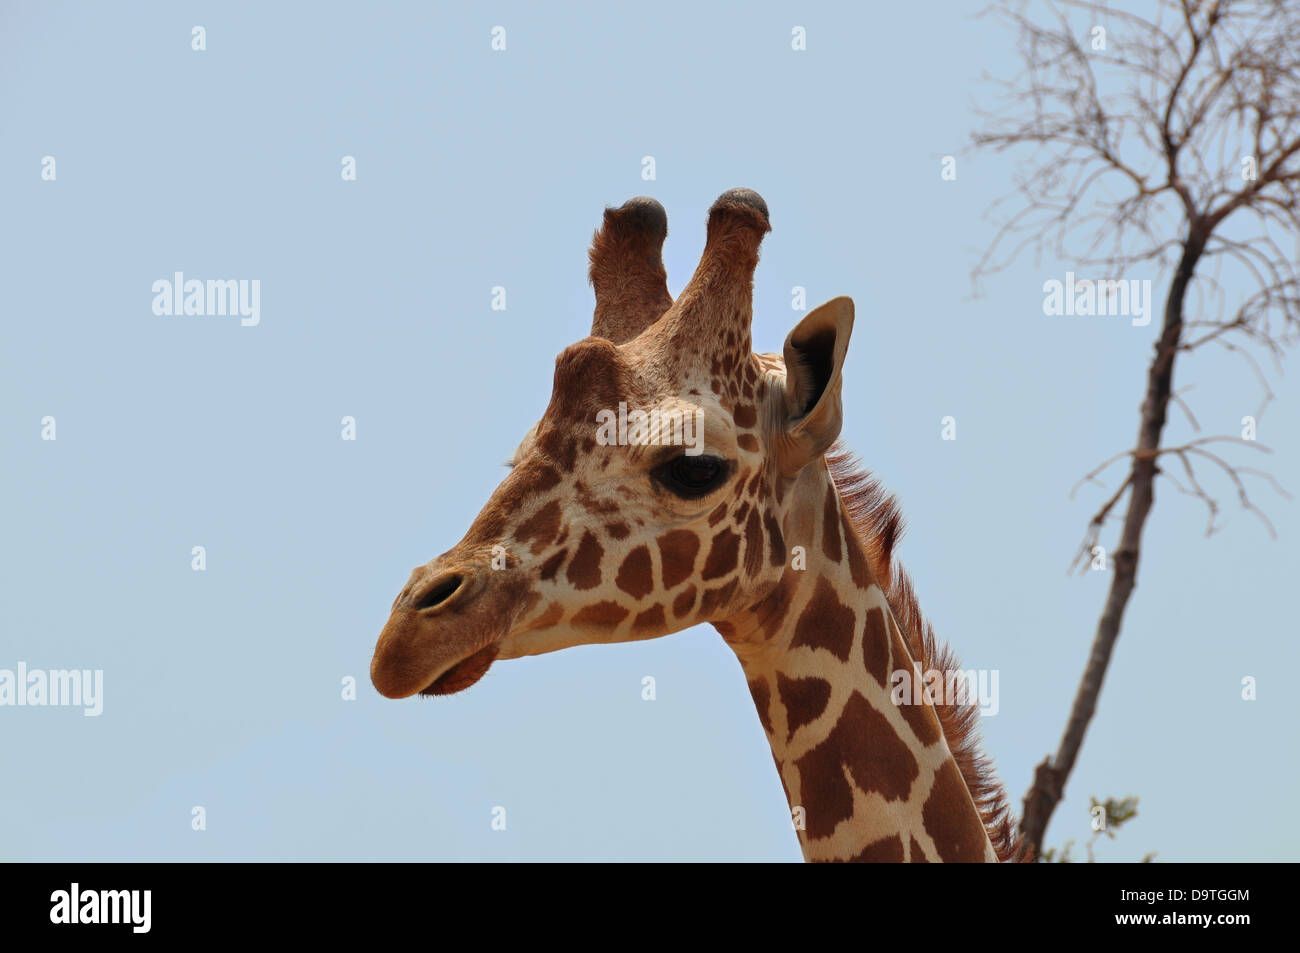 Girafe Girafe Baringo de disparition d'espèces indigènes à l'Ouganda et le Kenya. Banque D'Images